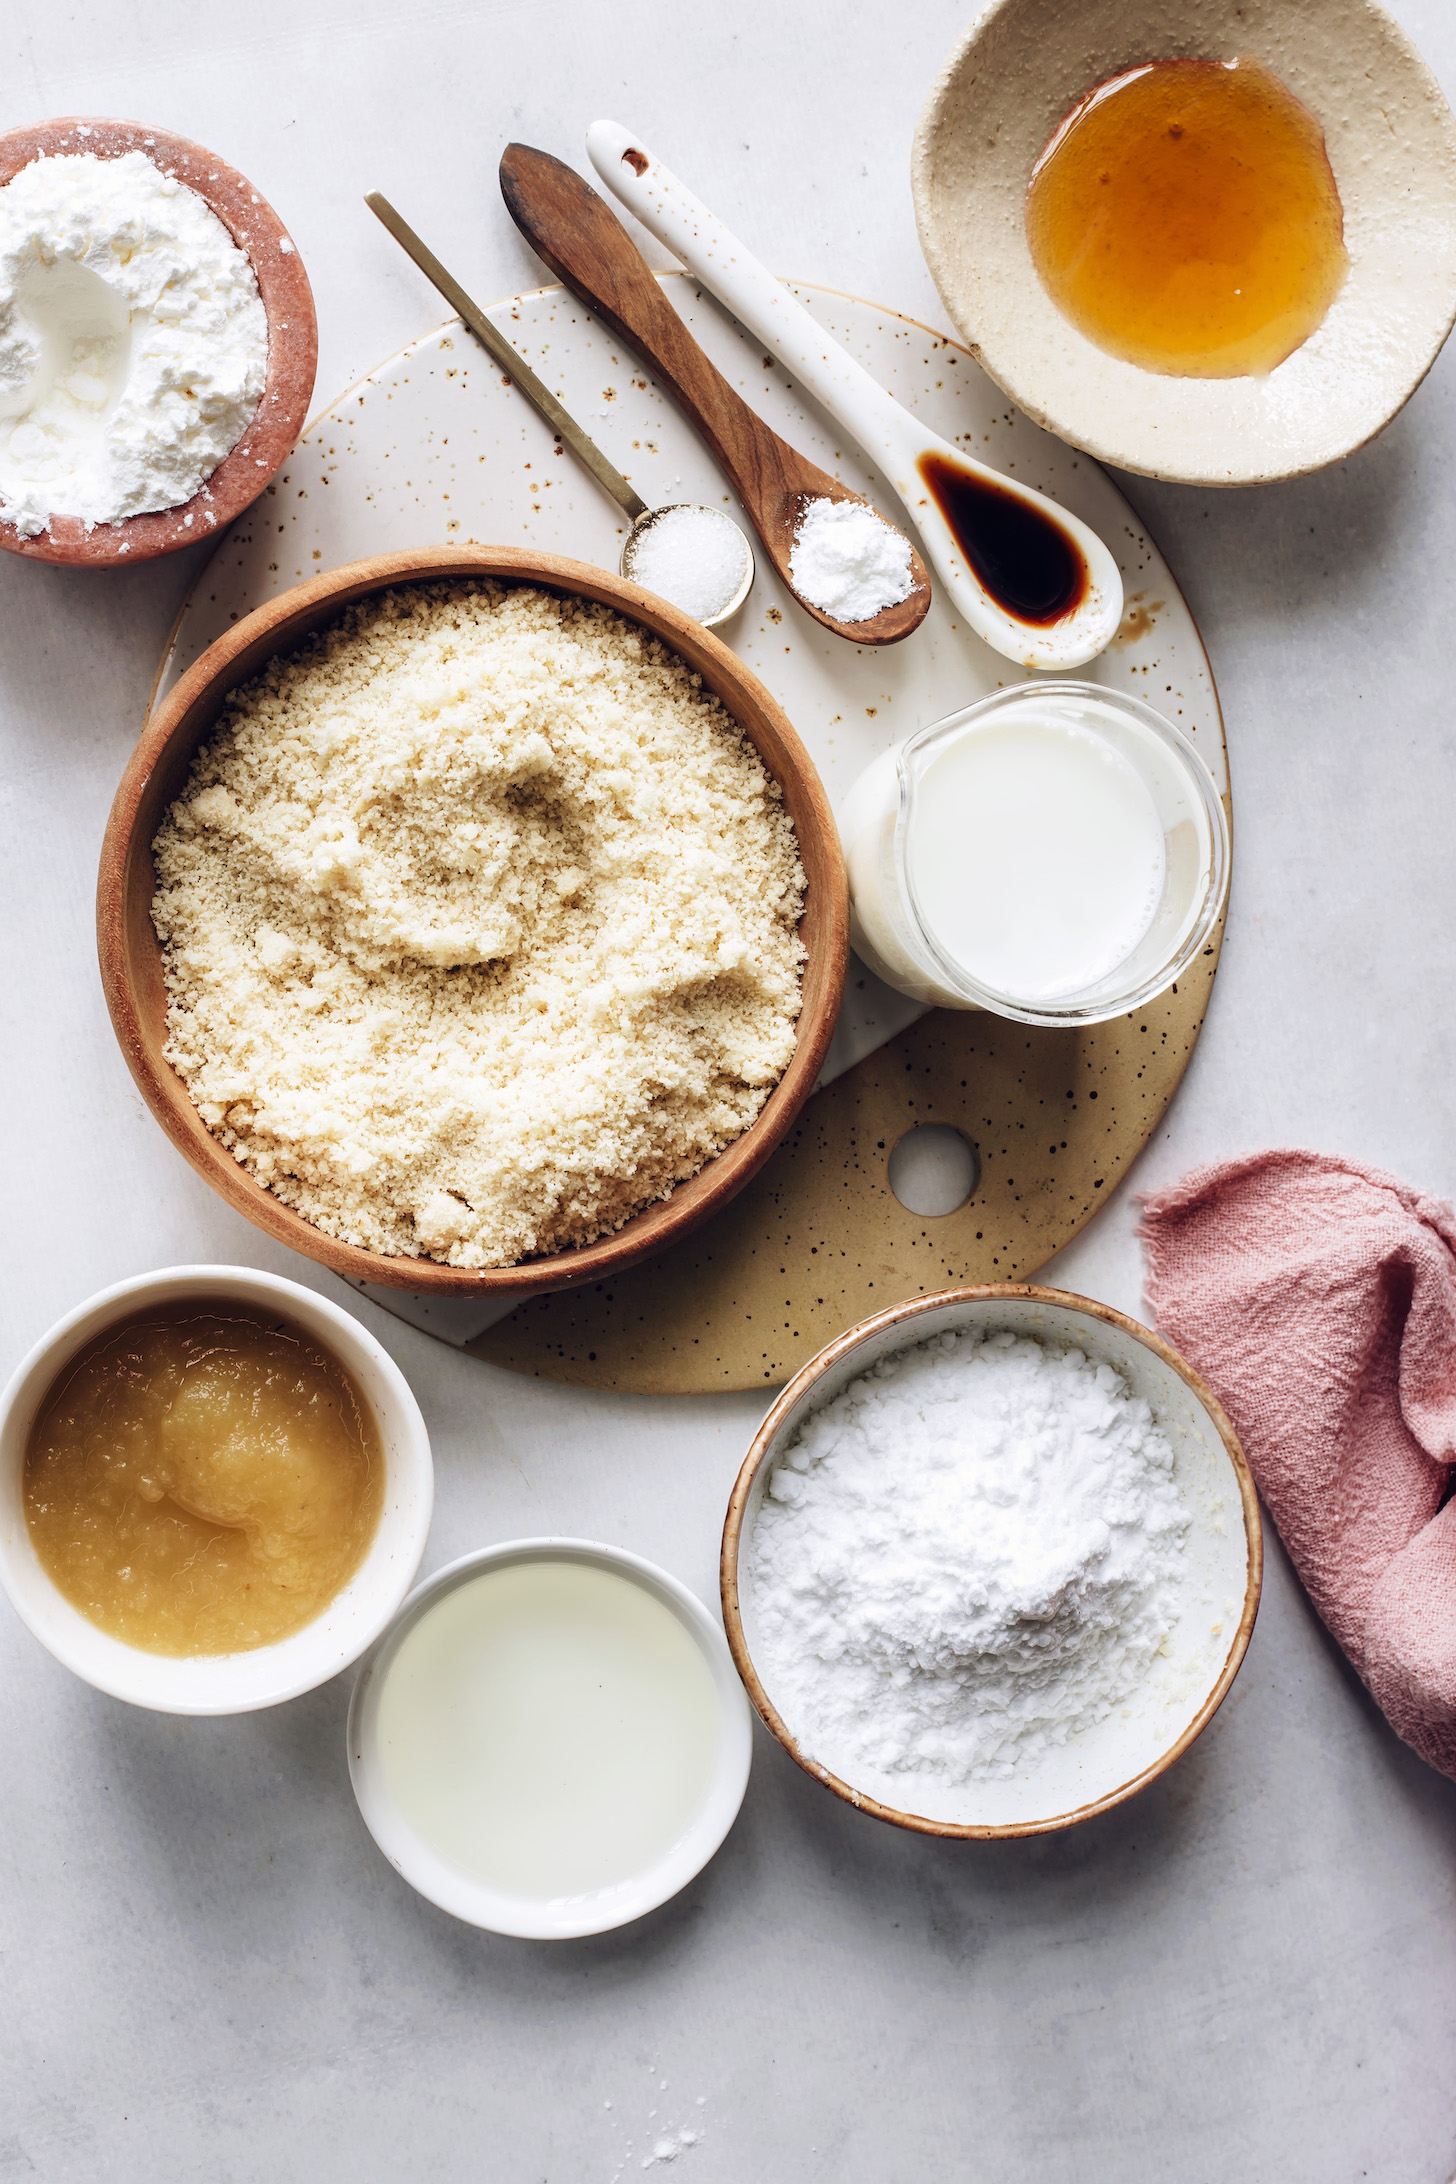 Almond flour, cornstarch, potato starch, vanilla, almond milk, applesauce, avocado oil, maple syrup, baking powder, and salt